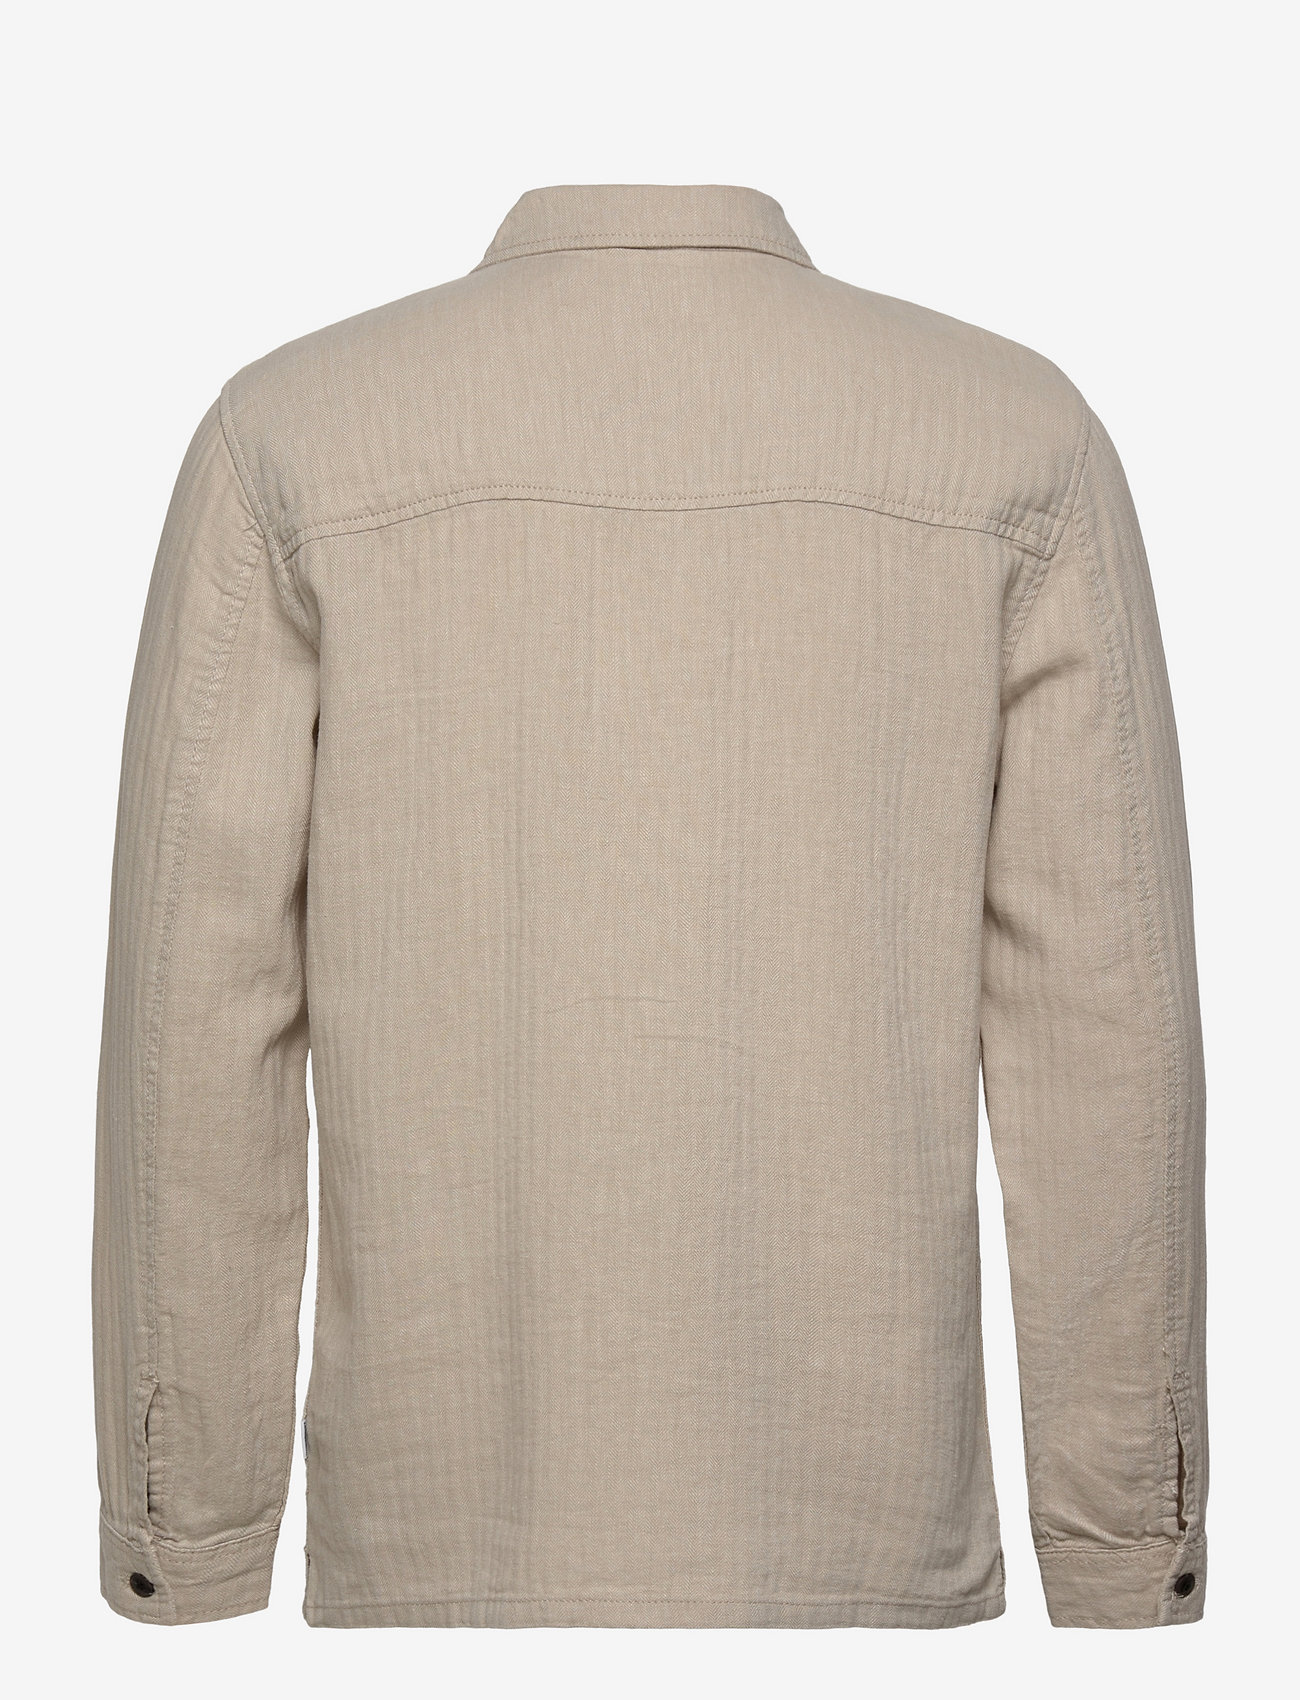 Lindbergh - Cotton linen overshirt L/S - mężczyźni - lt stone - 1